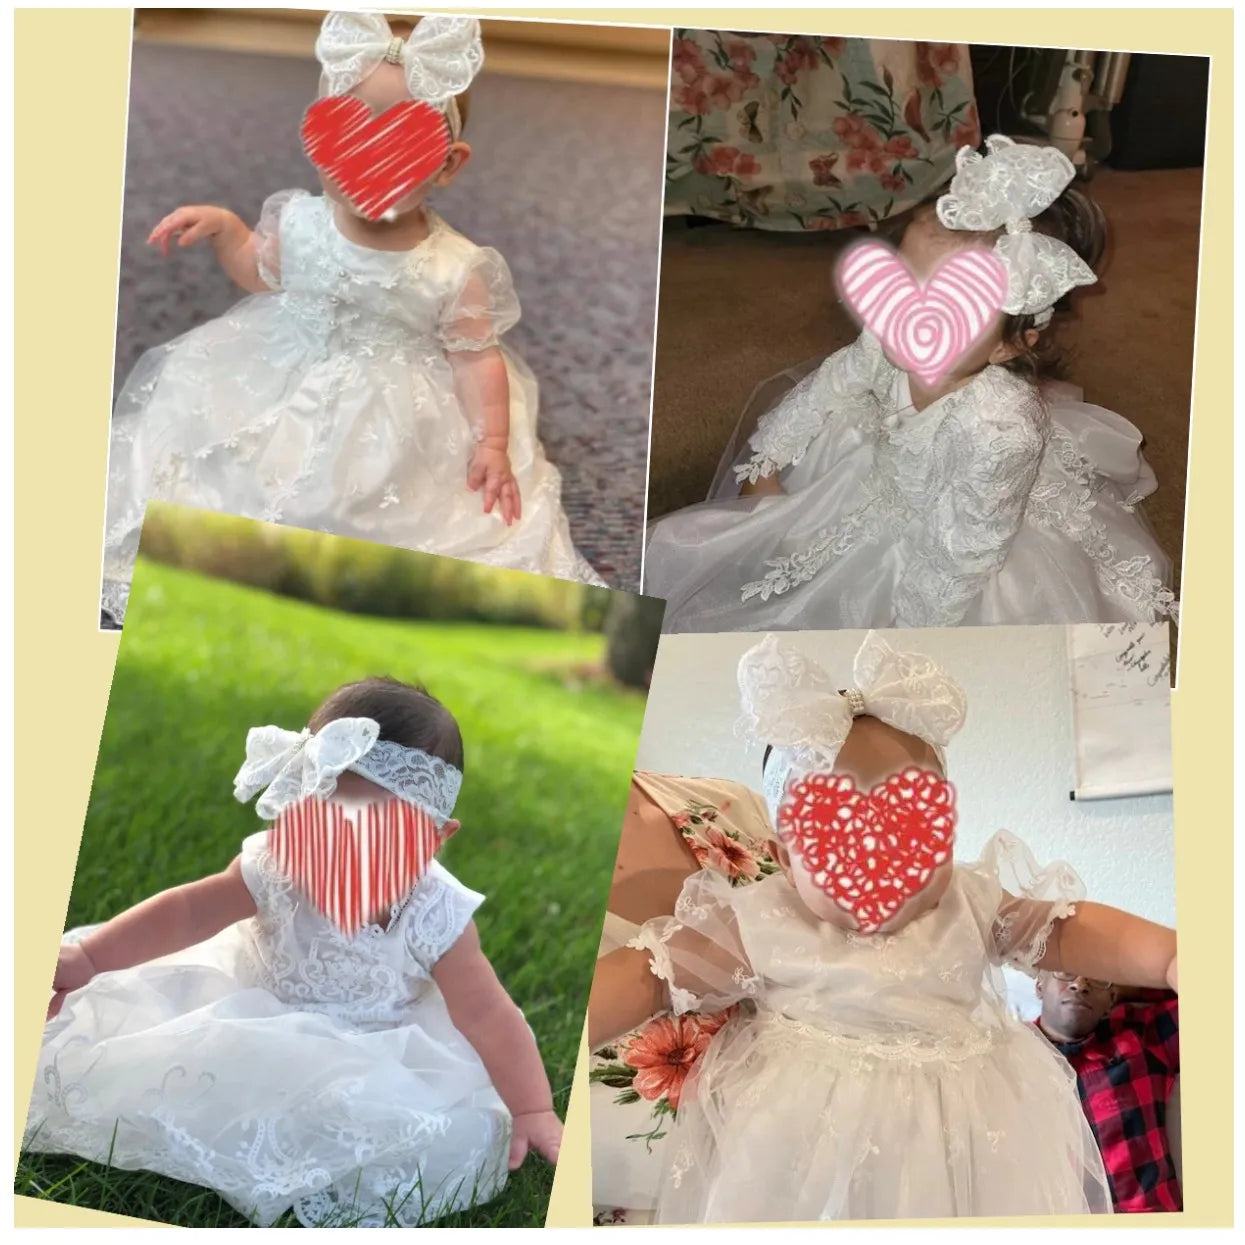 Vintage Baby Girl Dress: Baptism, Wedding, Christening, Lace Heirloom Gown Set.